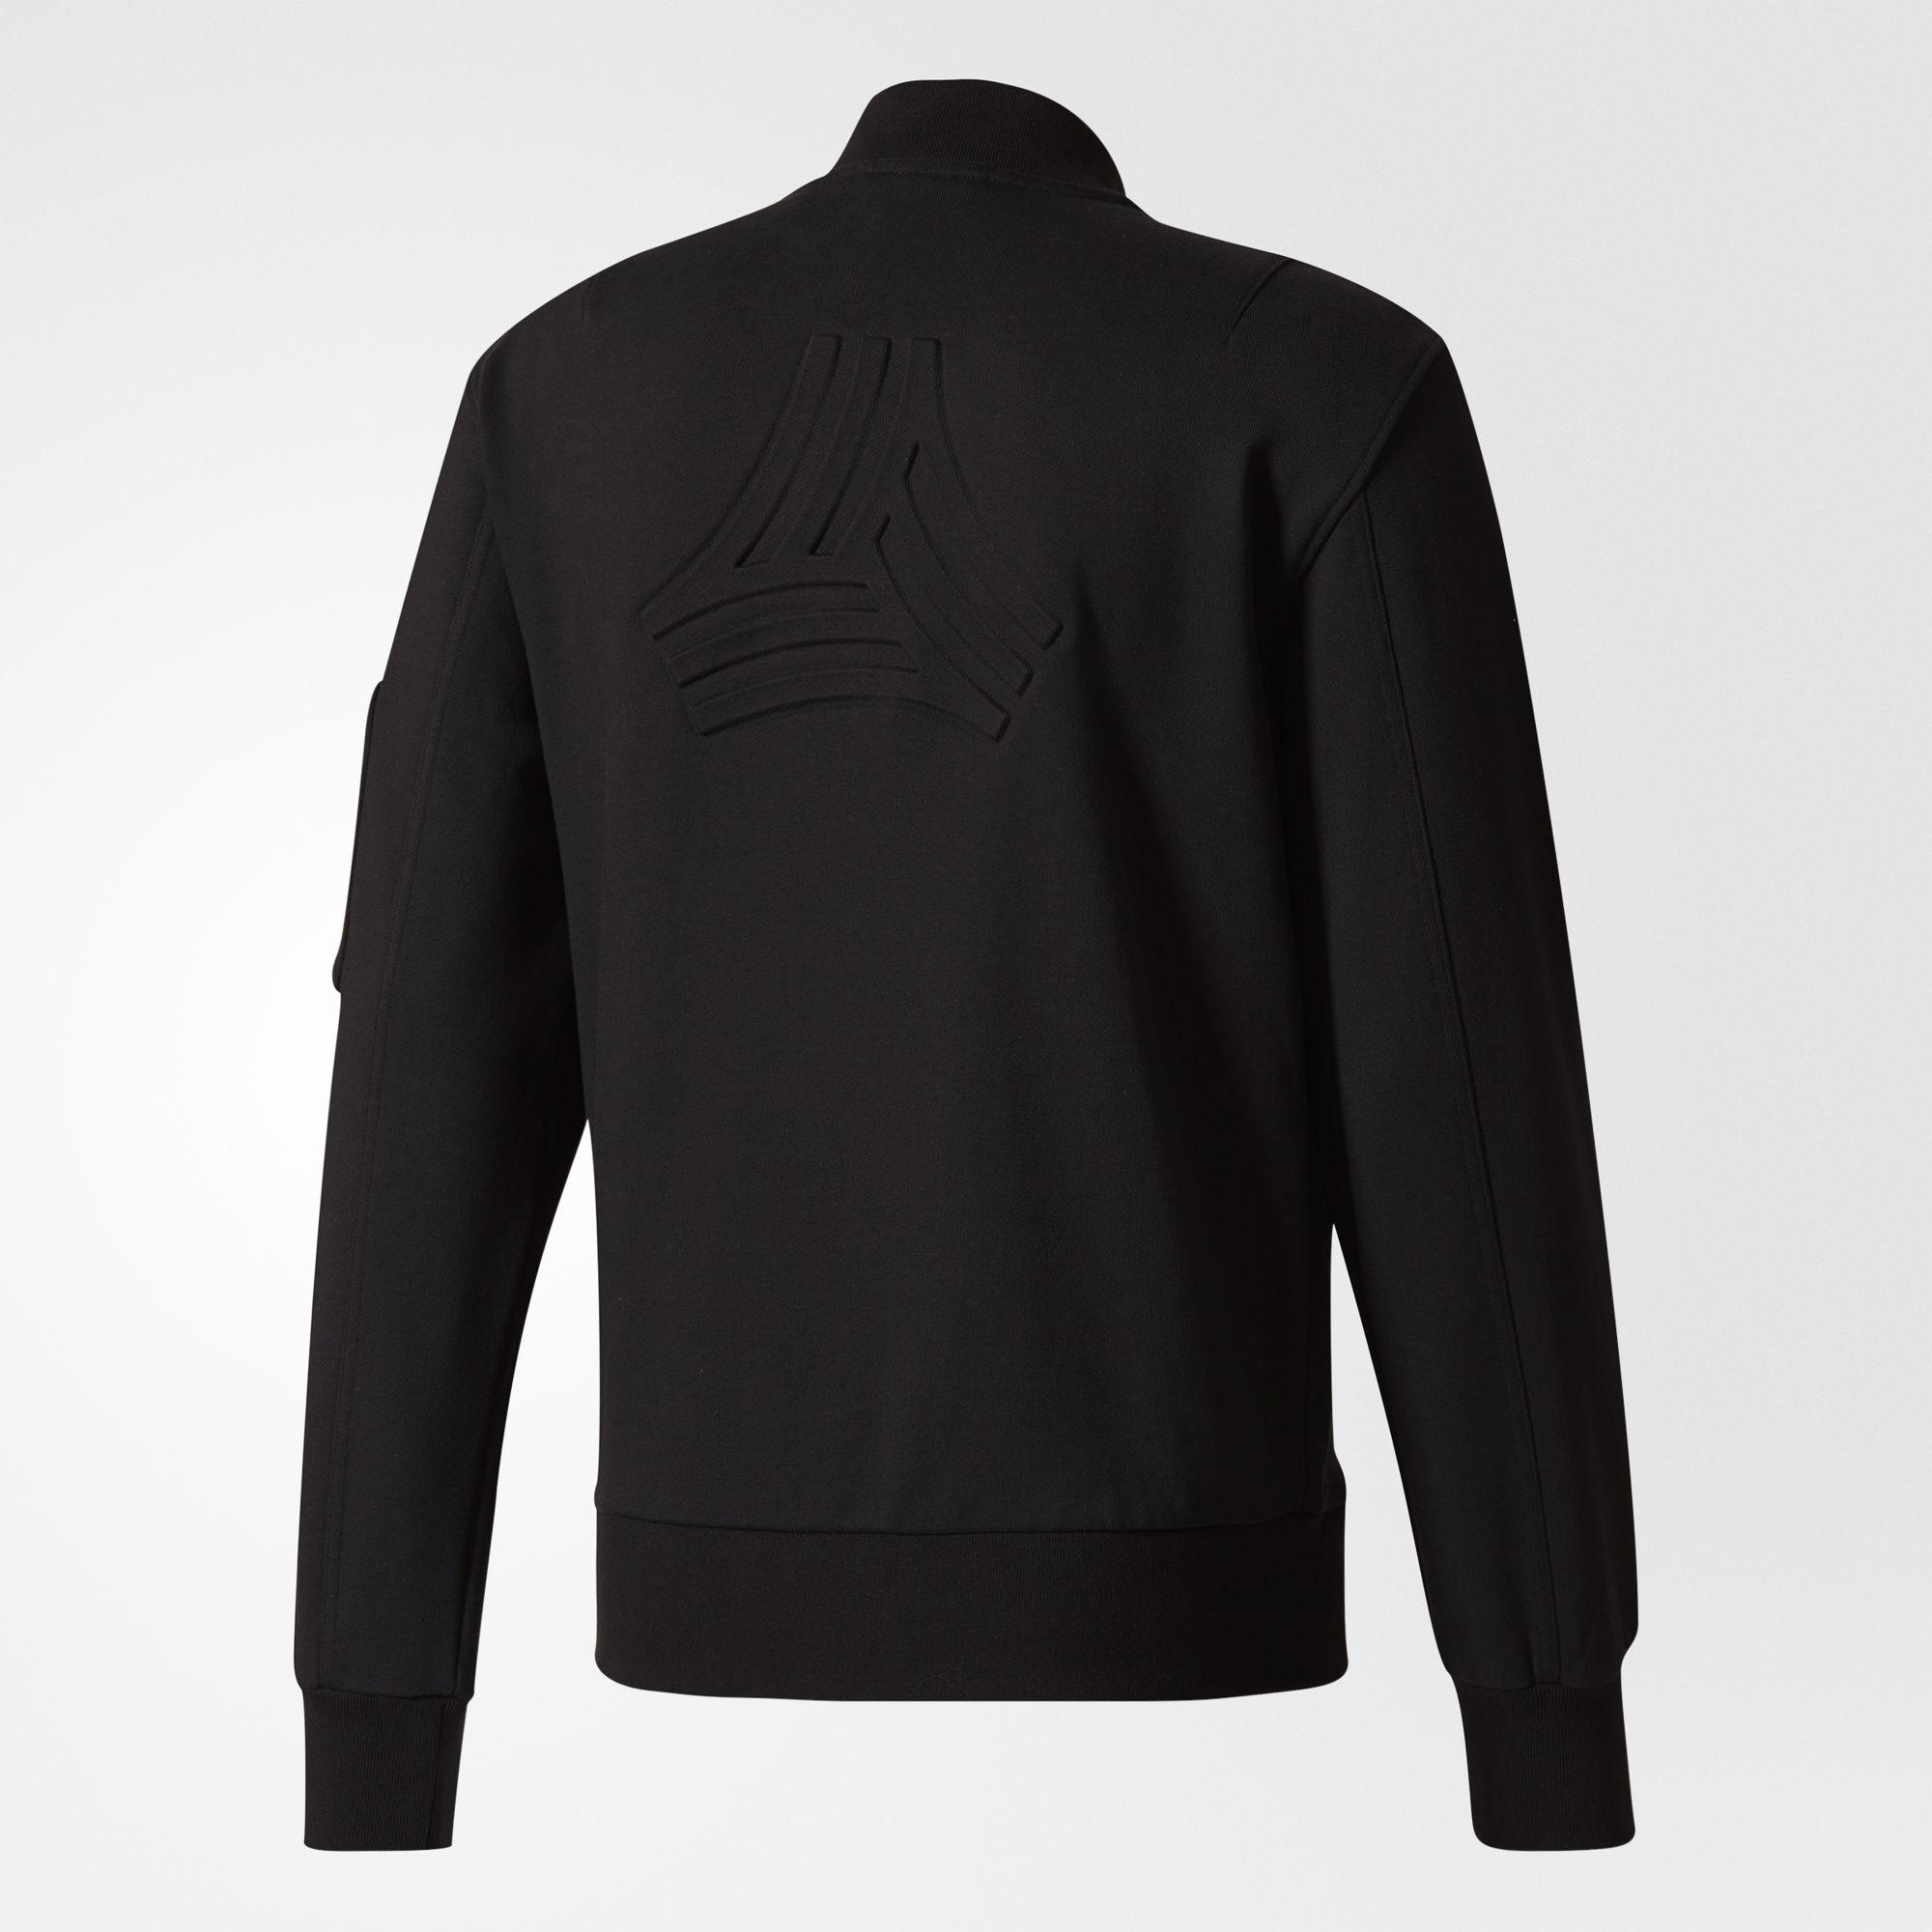 adidas men's tango future bomber jacket black